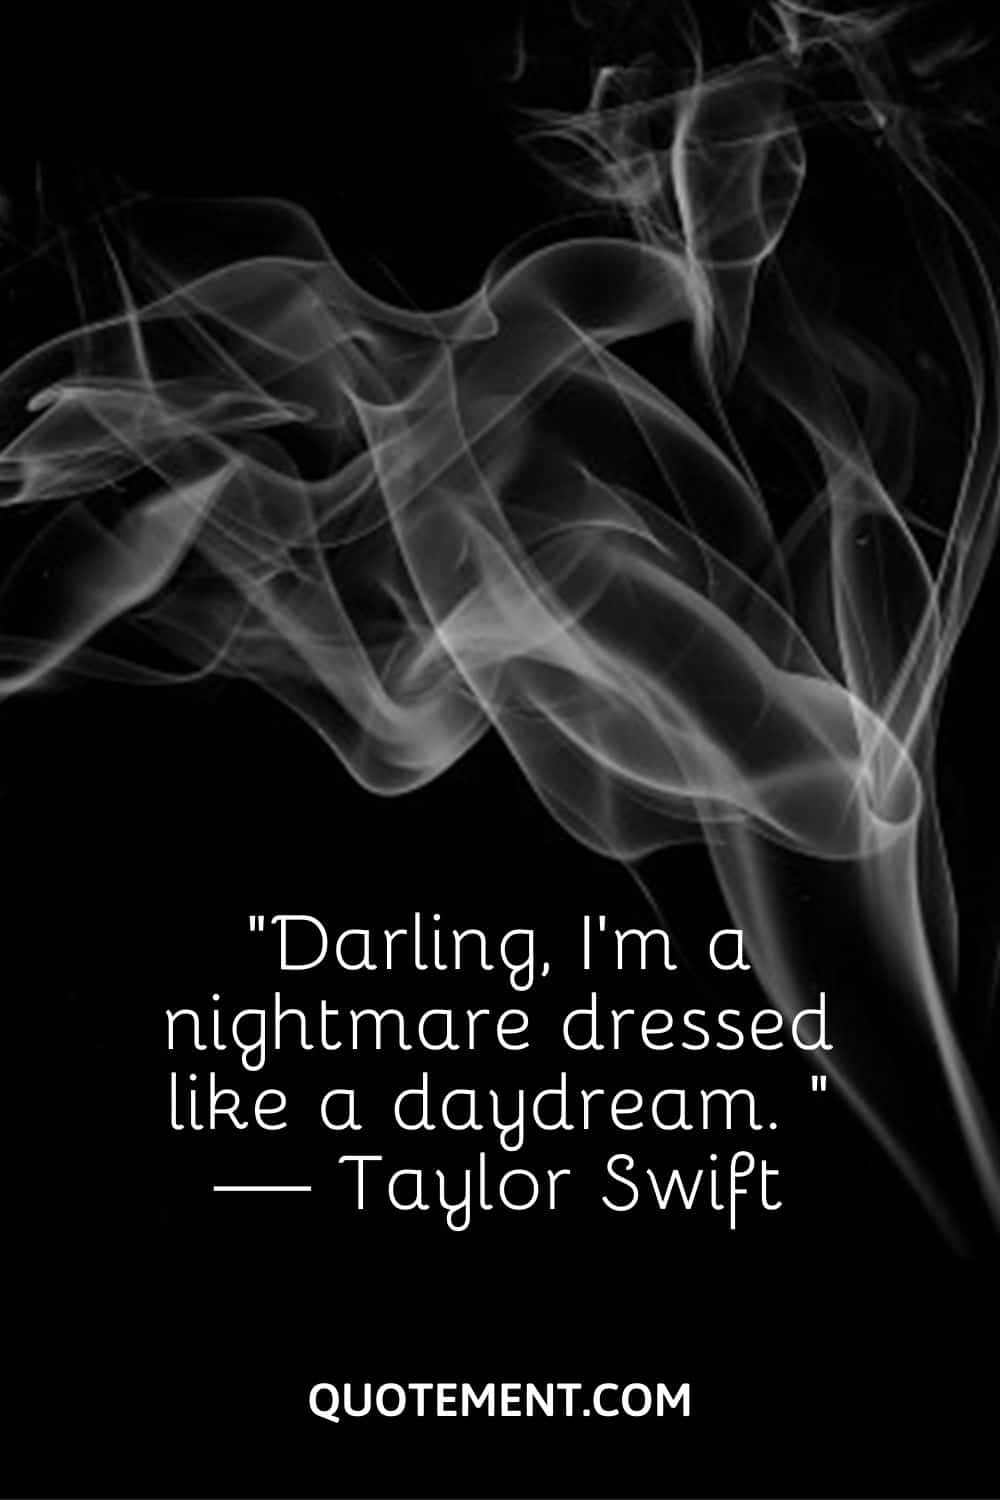 Darling, I’m a nightmare dressed like a daydream